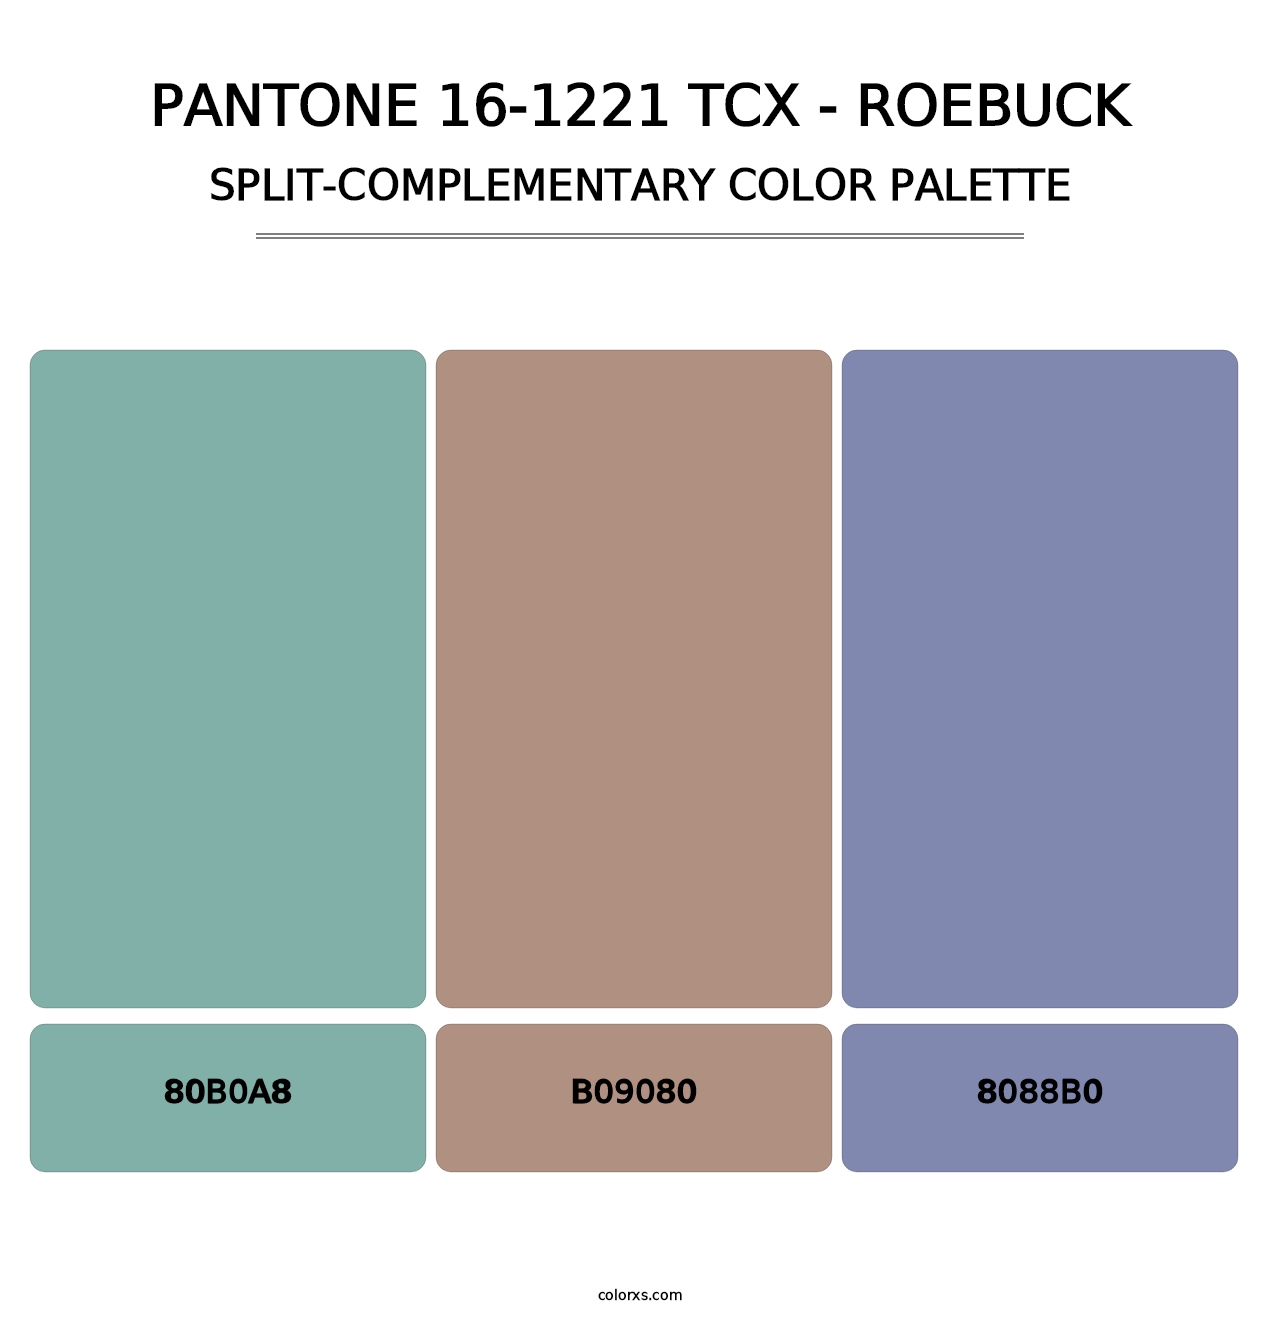 PANTONE 16-1221 TCX - Roebuck - Split-Complementary Color Palette